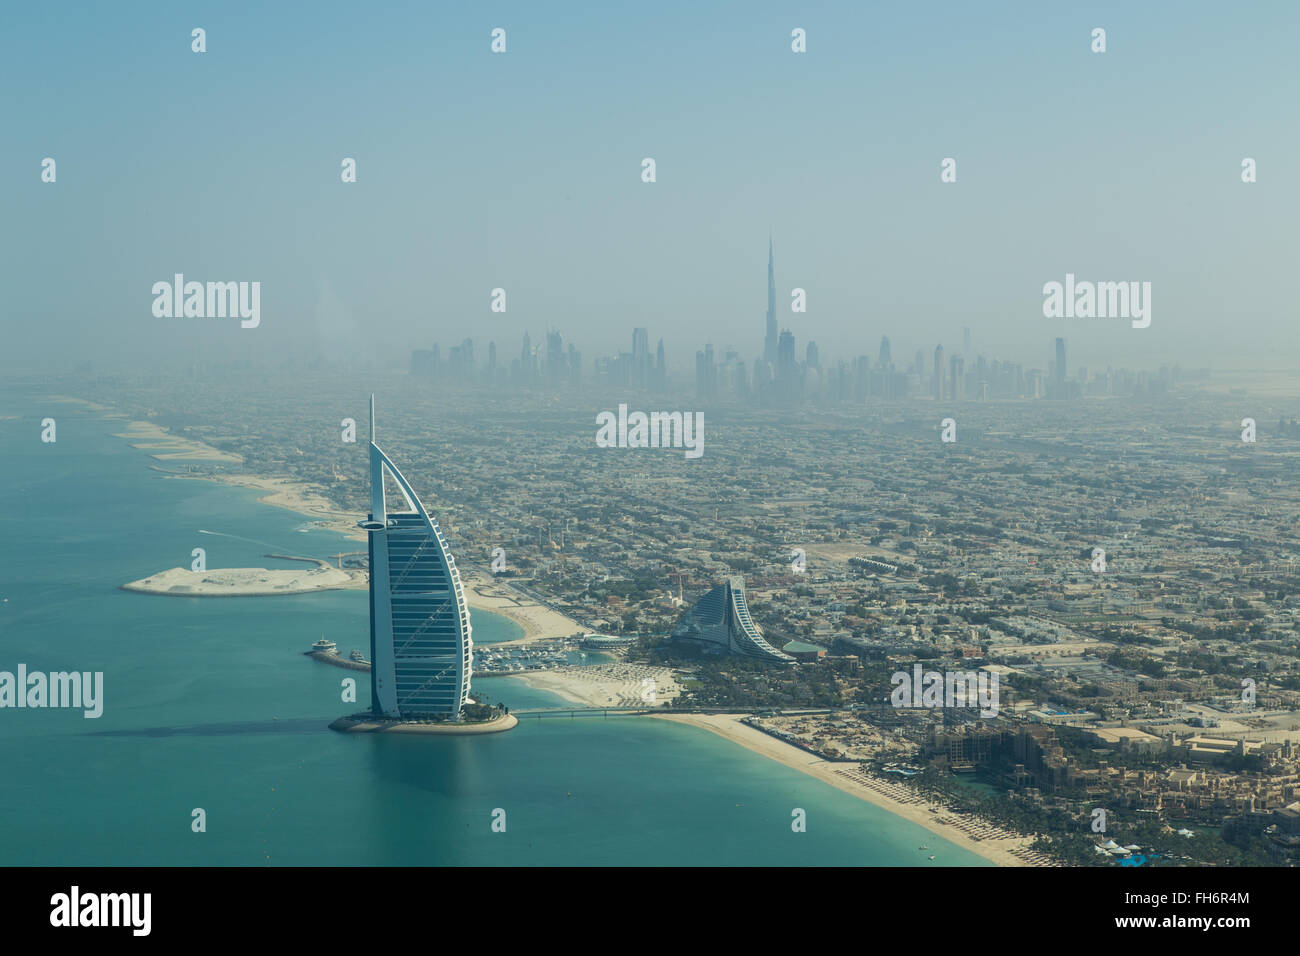 Dubai, United Arab Emirates - October 17, 2014: Photograph of the famous Burj Al Arab hotel in Dubai taken from a seaplane. Stock Photo